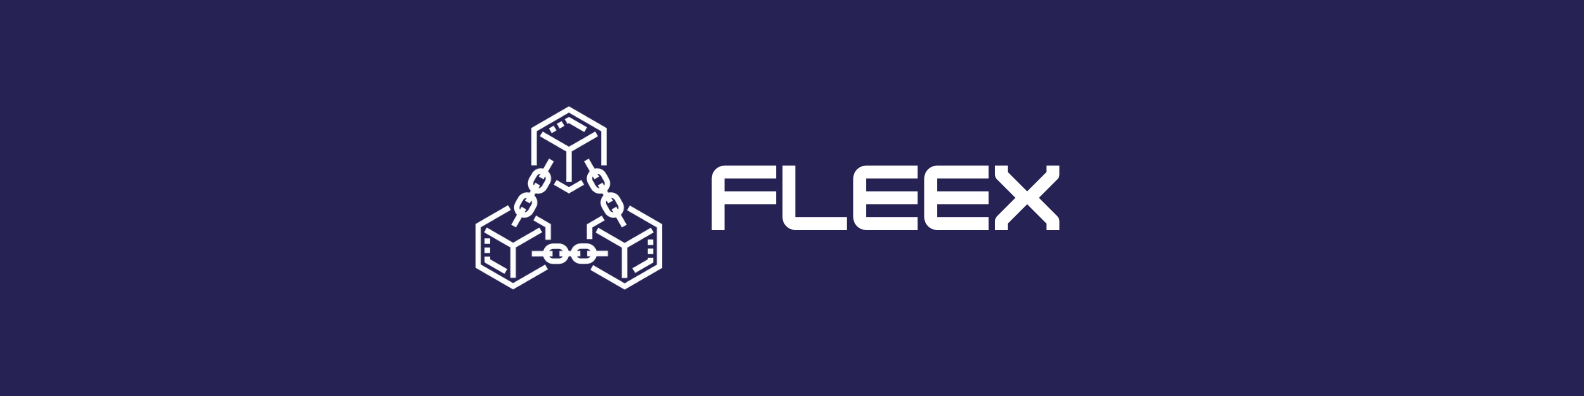 Fleex-Banner.png